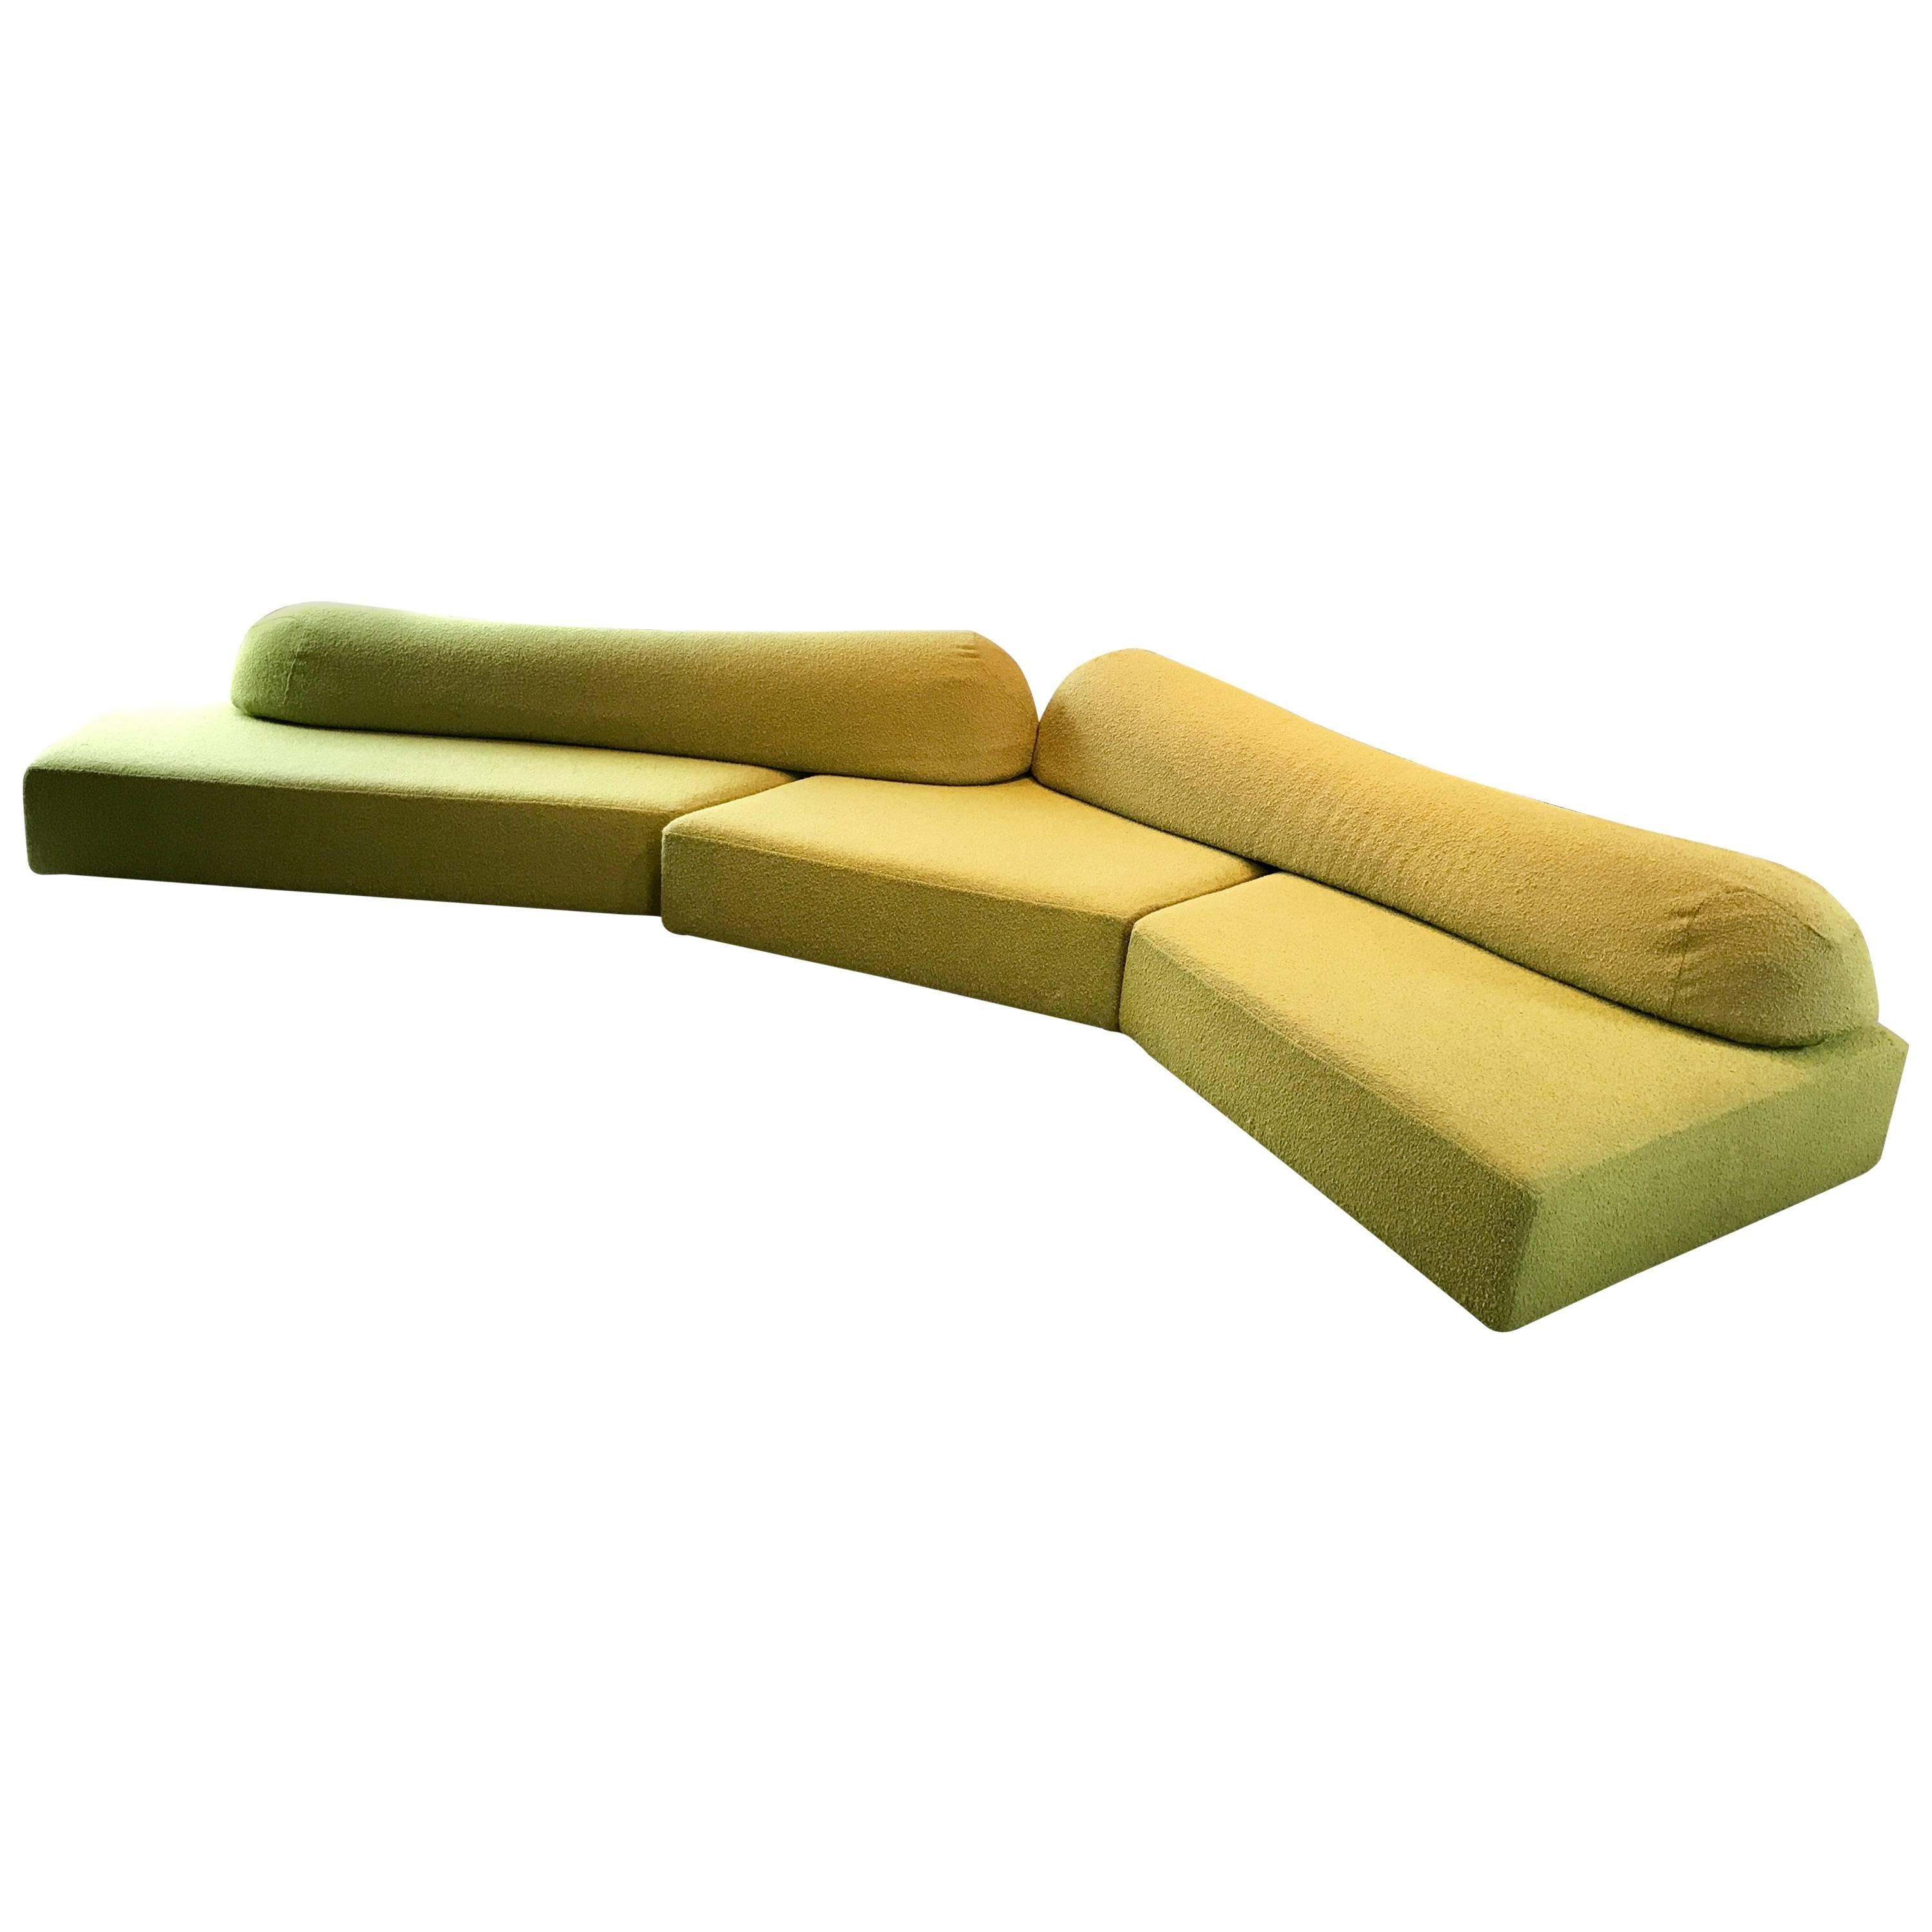 Modular Green Sectional Sofa "On The Rocks" by Francesco Binfare for Edra, Italy